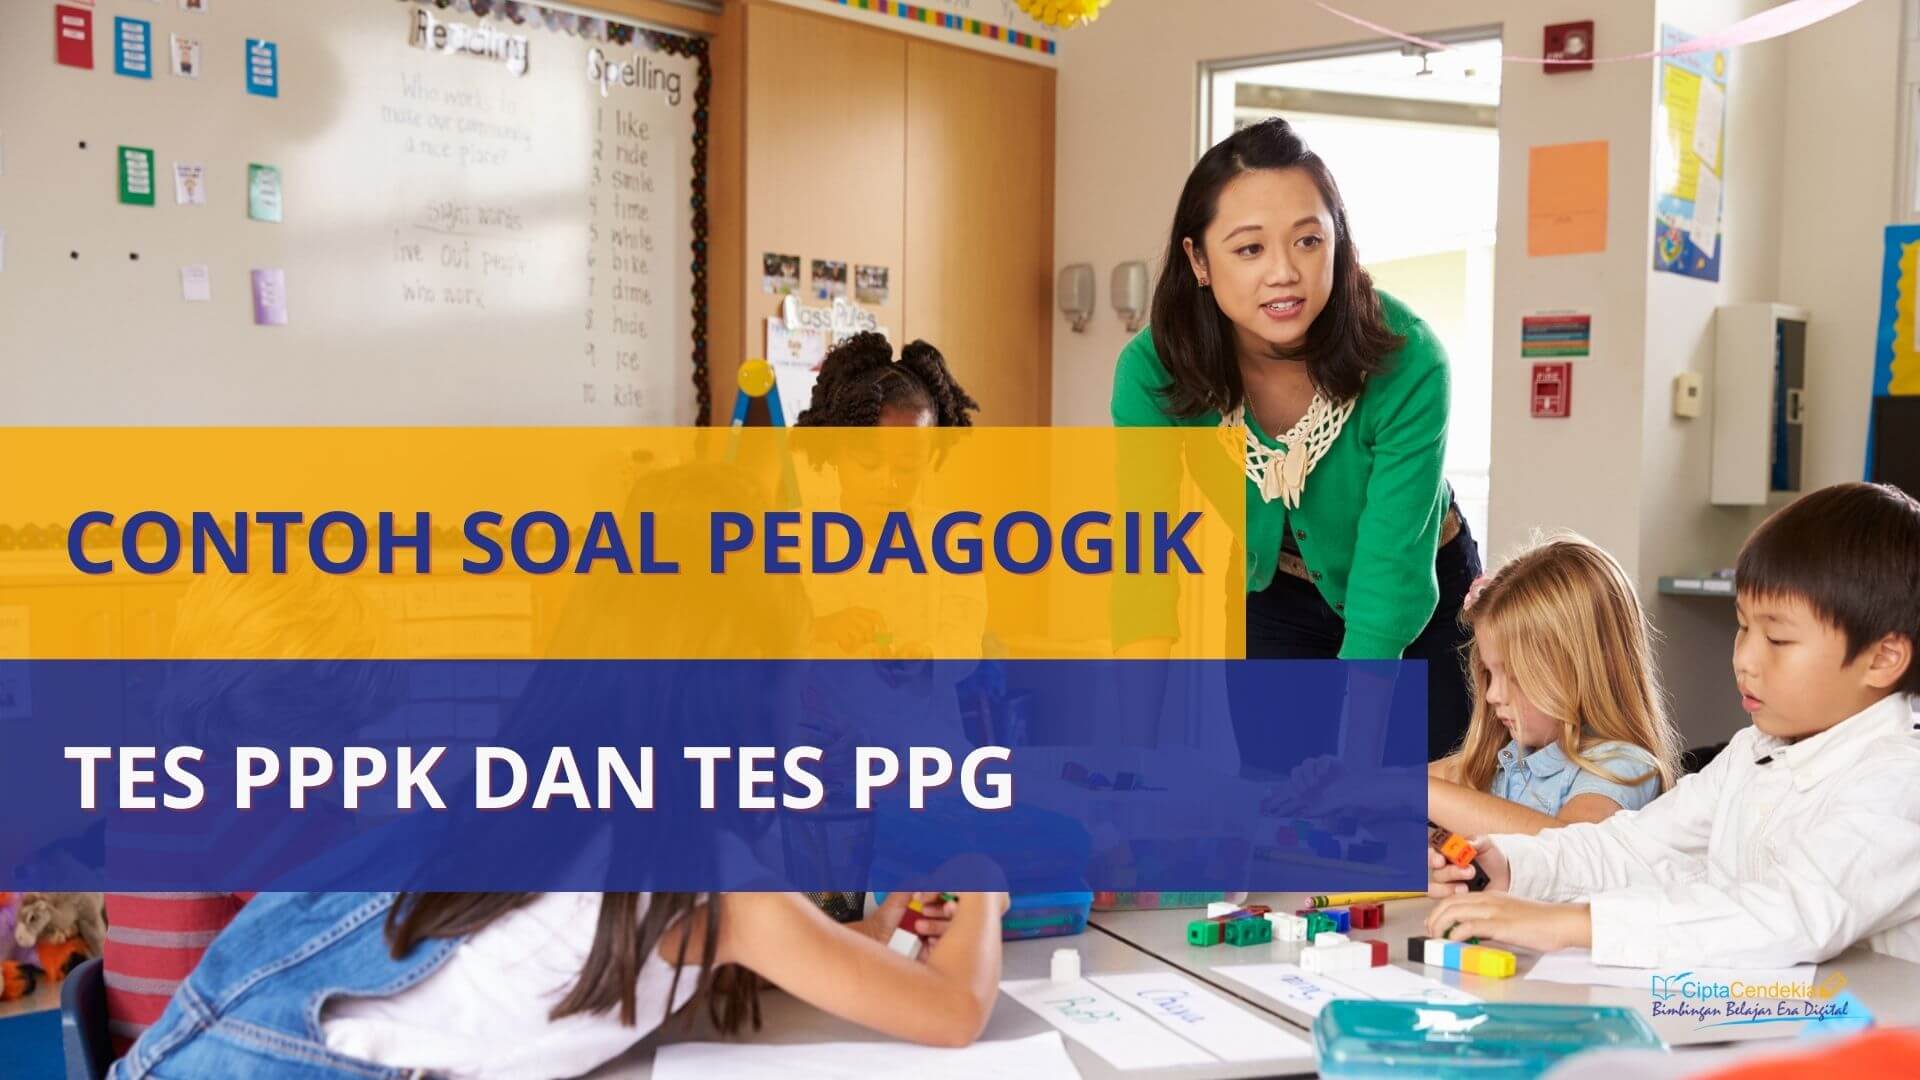 contoh soal pedagogik tes pppk dan tes ppg